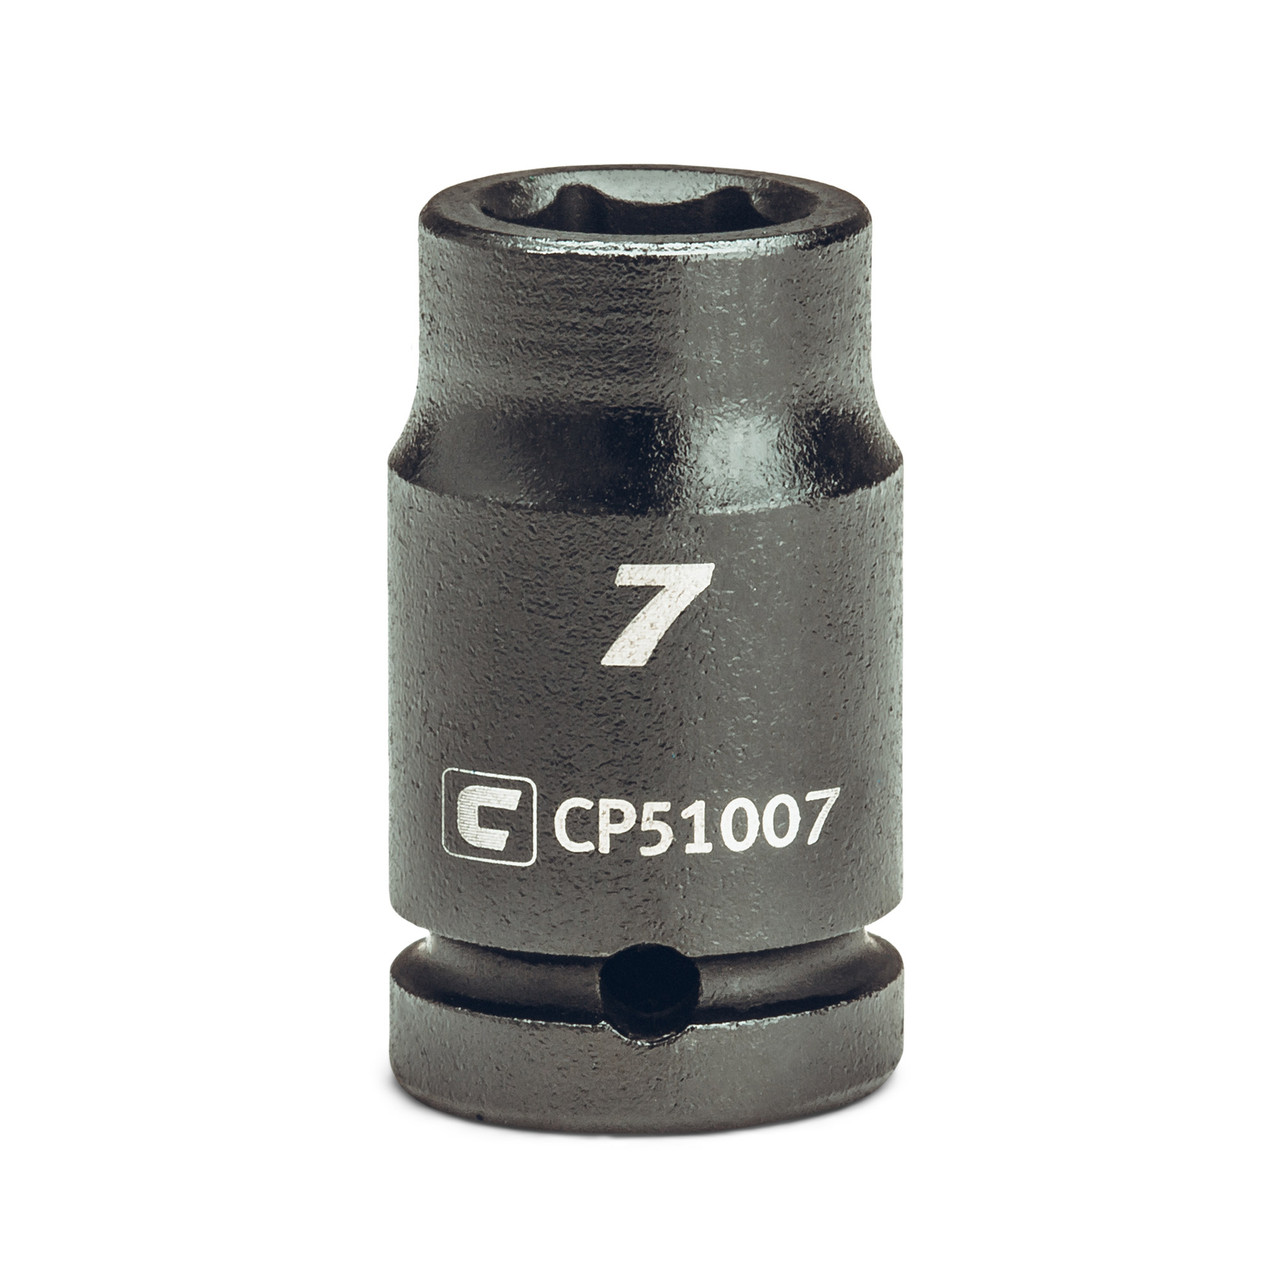 Capri Tools 7 mm Shallow Impact Socket, 1/4-Inch Drive, 6-Point, Metric